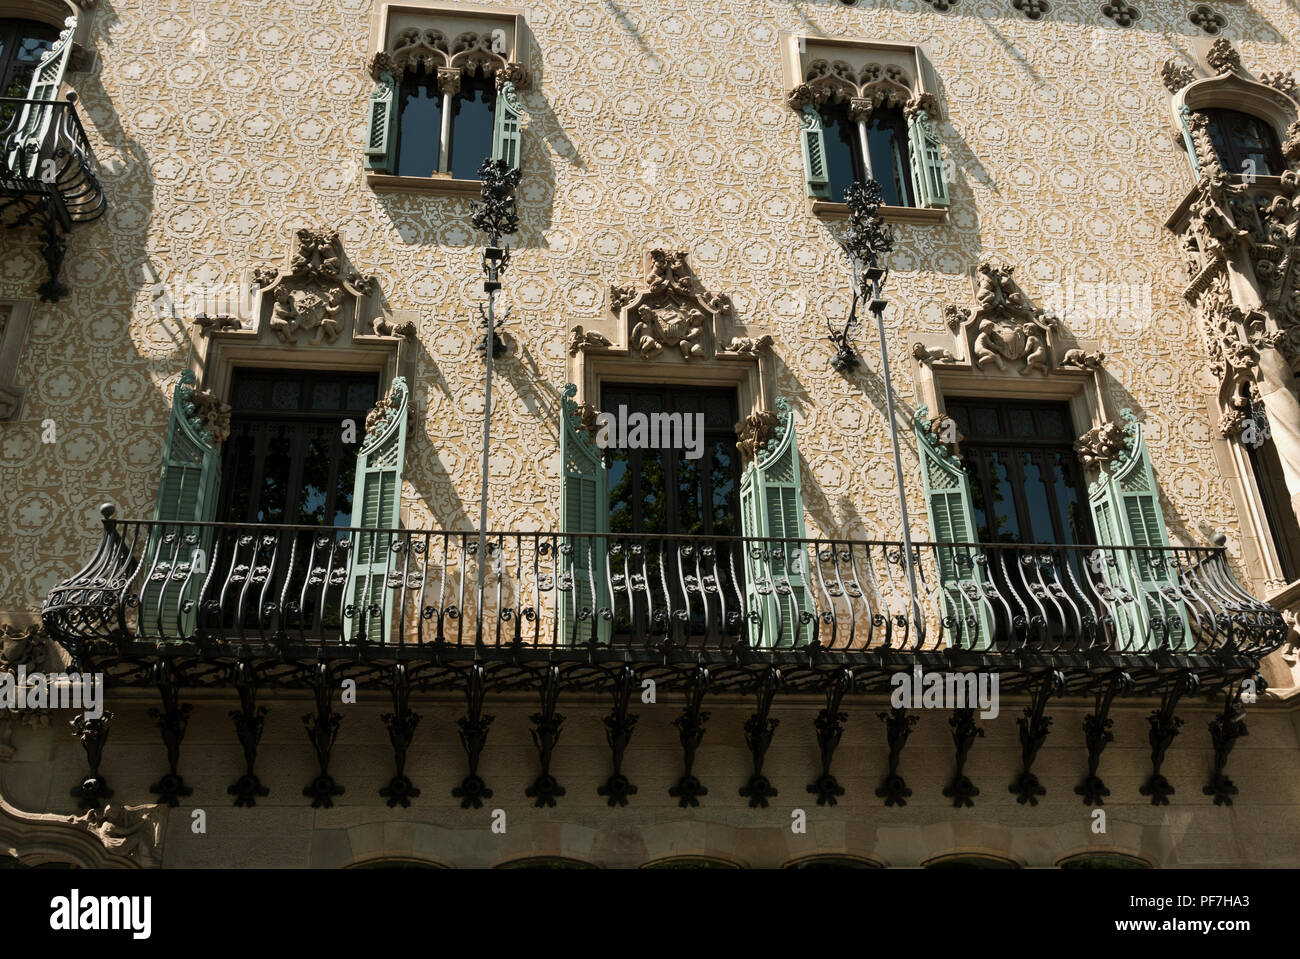 The exterior of Casa Amatller  historic building built 1898-1900, Barcelona, Spain Stock Photo